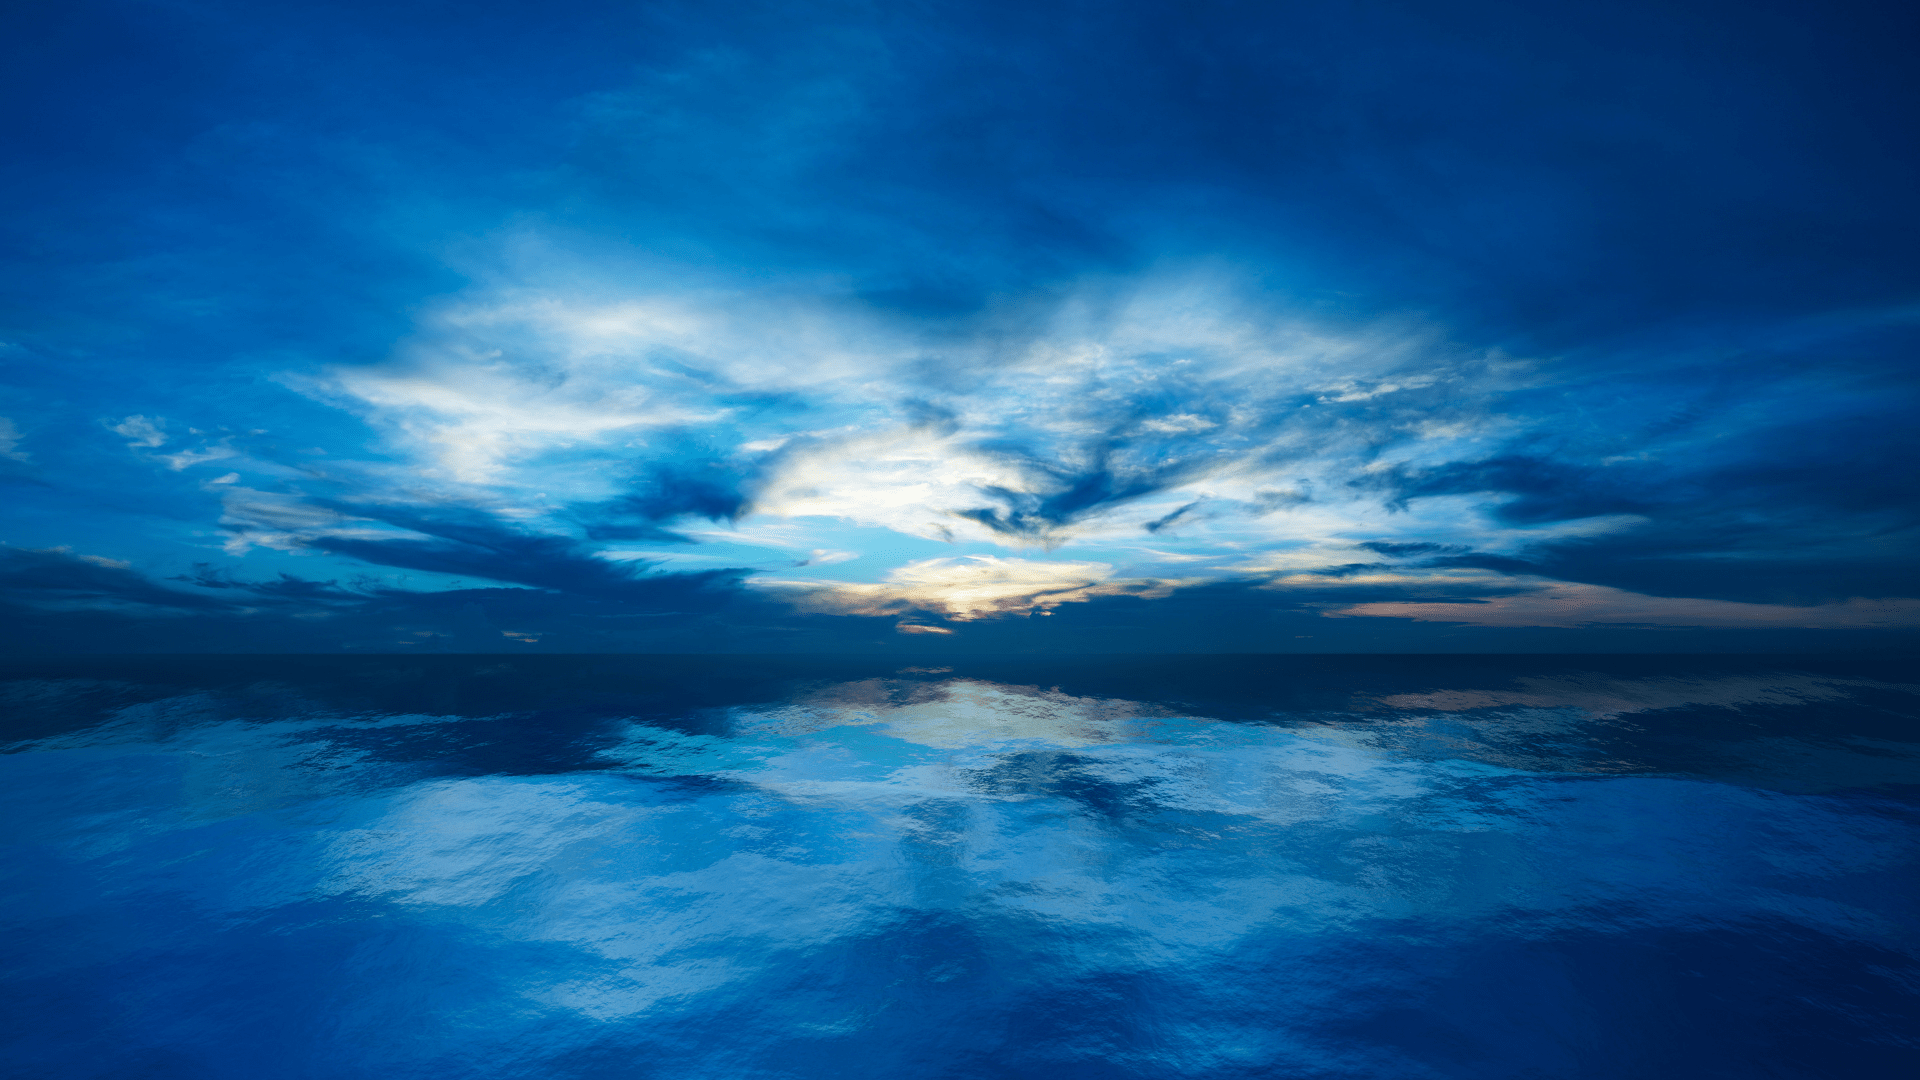 A pool under a cloudy sky - Blue